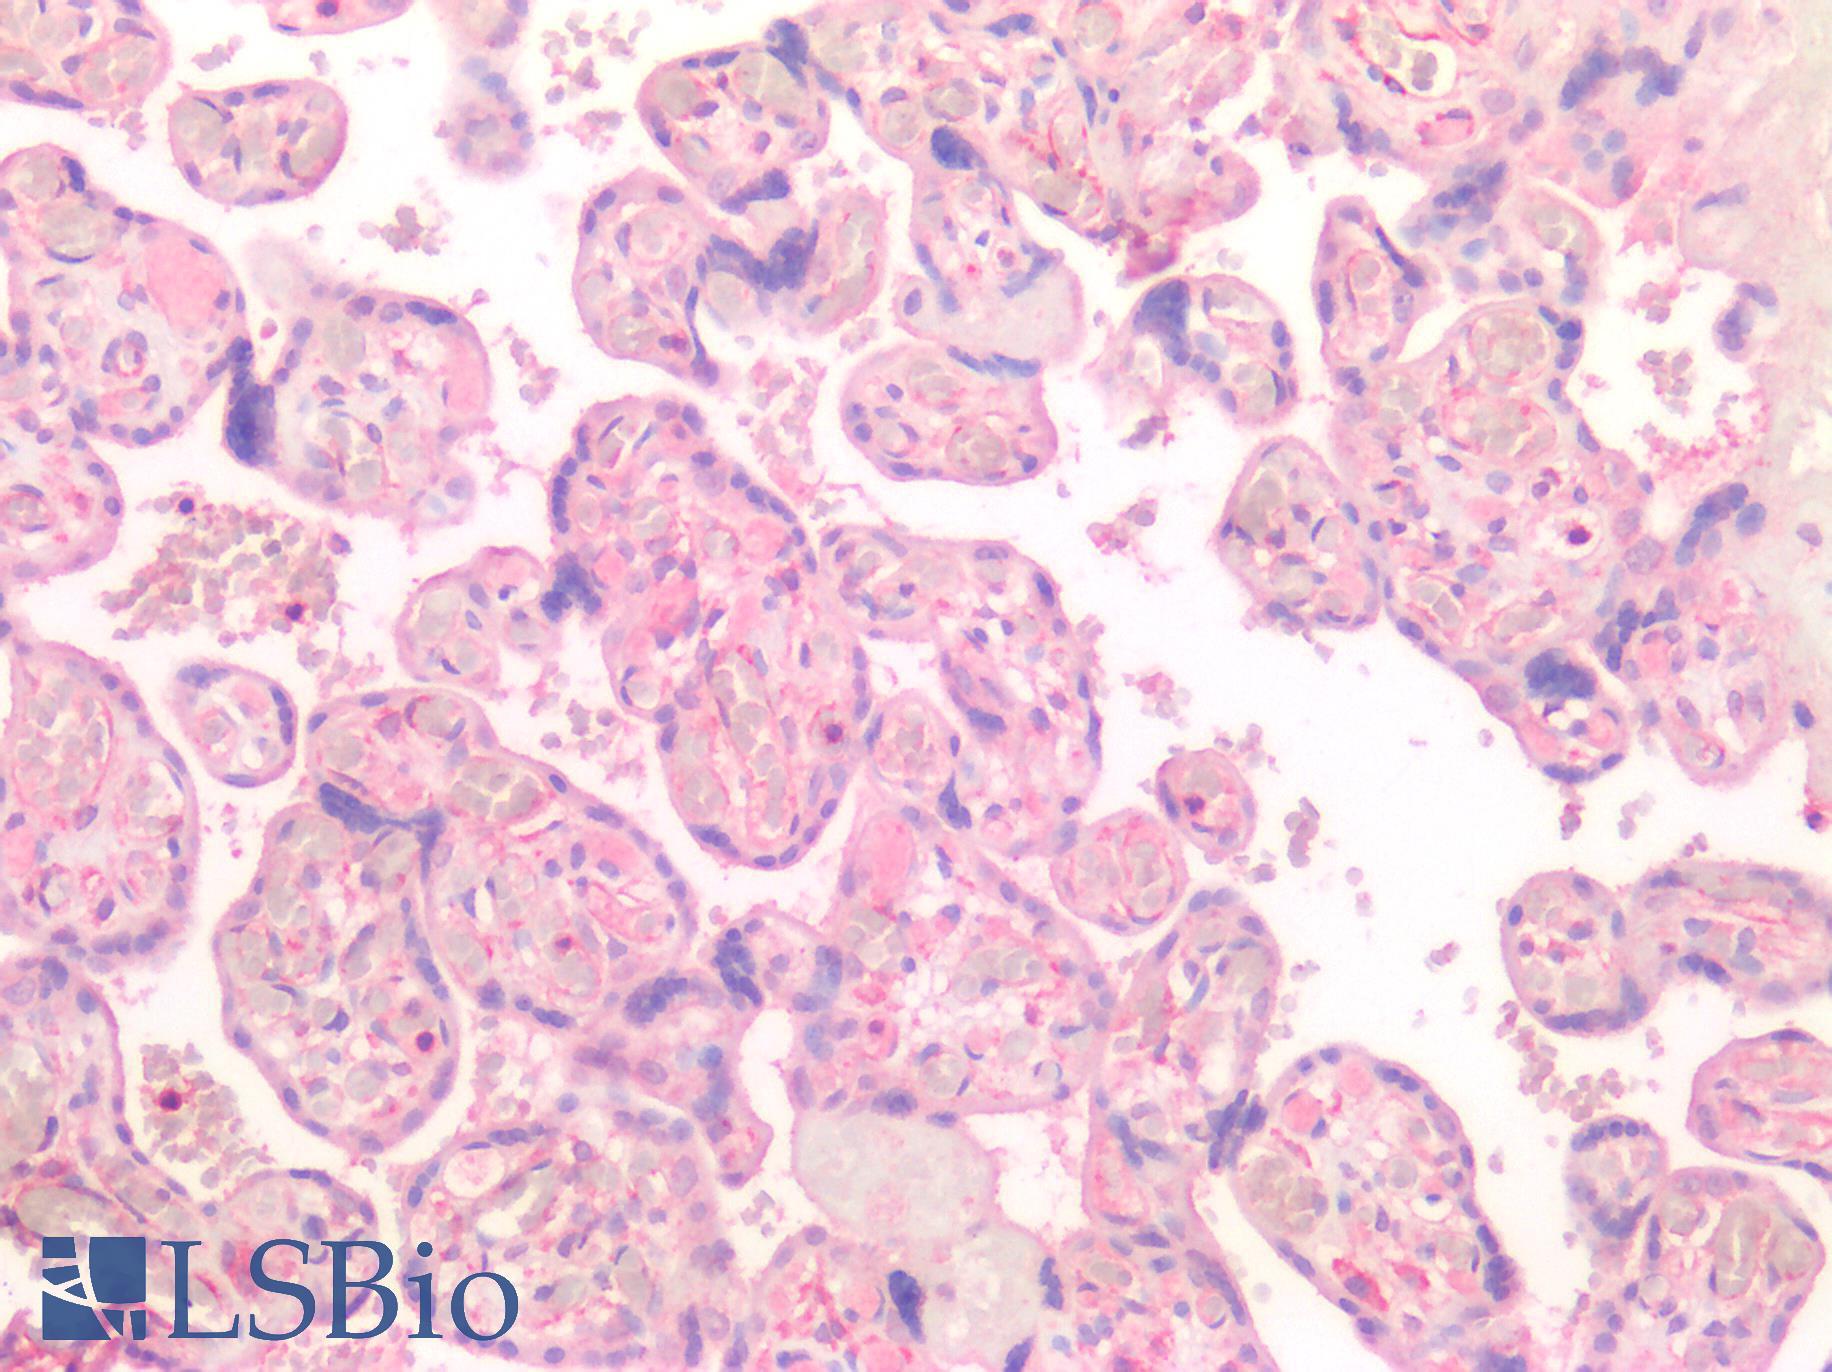 CTSK / Cathepsin K Antibody - Human Placenta: Formalin-Fixed, Paraffin-Embedded (FFPE)